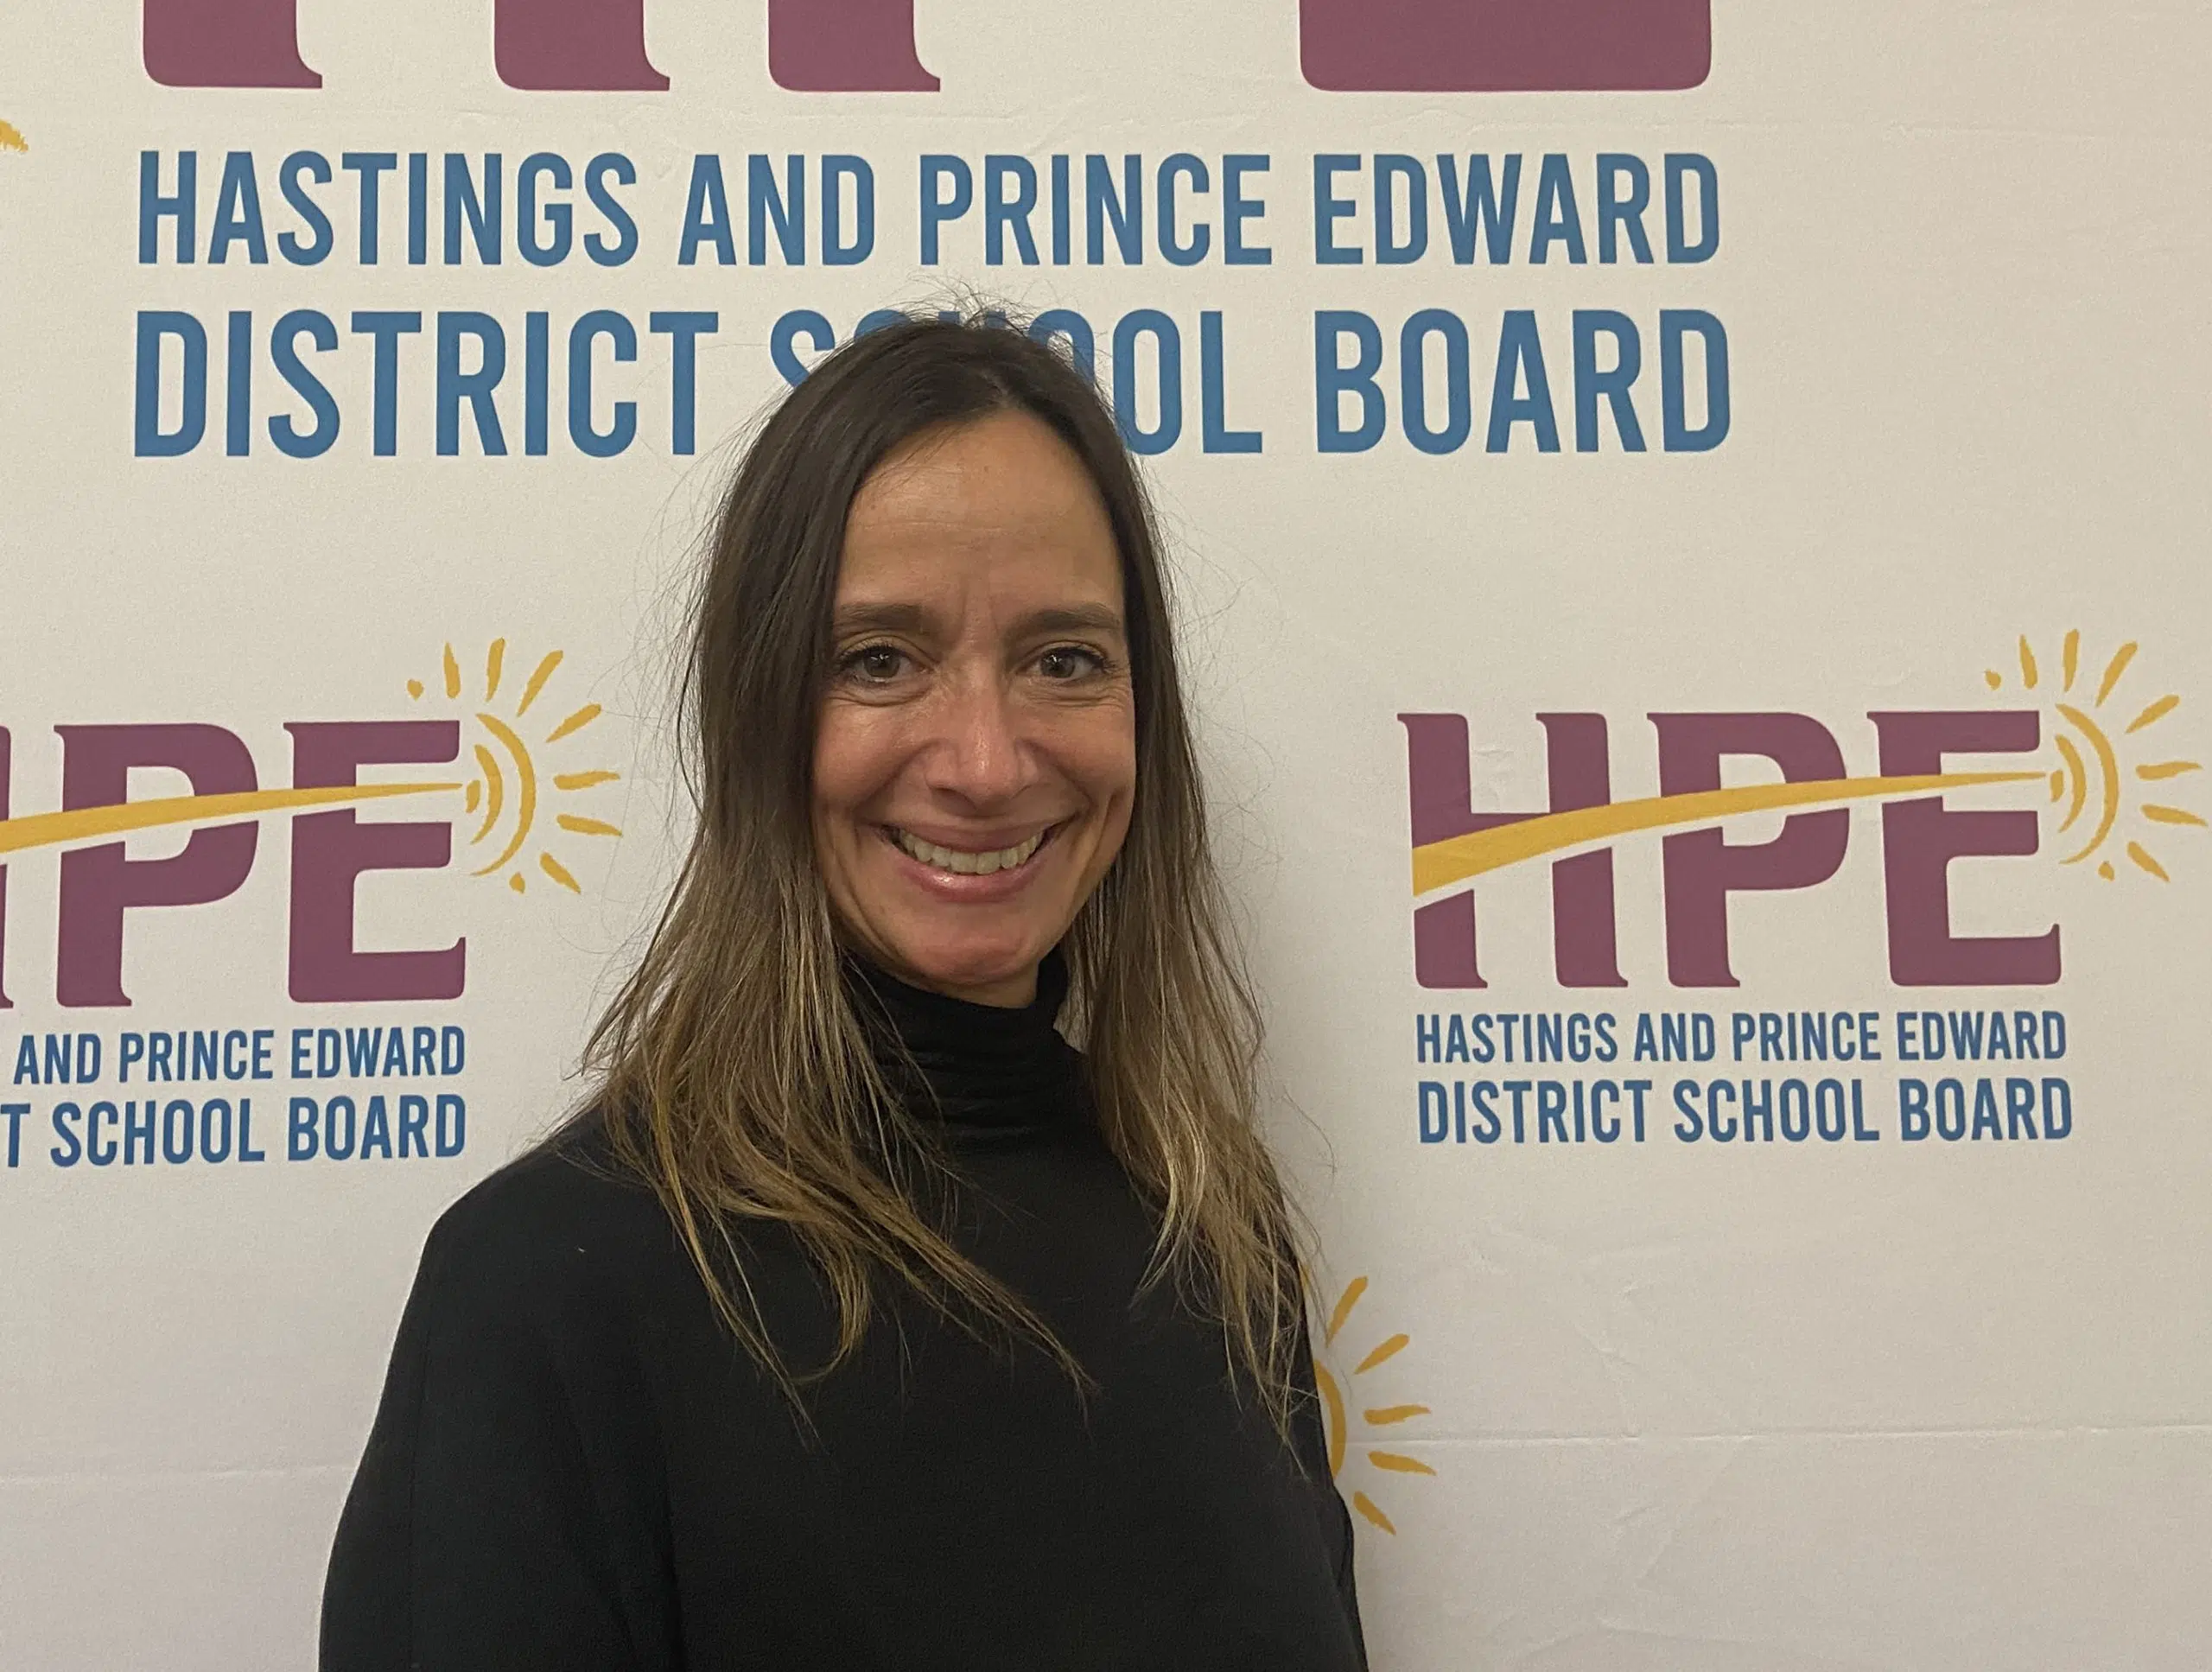 New leadership at HPE School Board